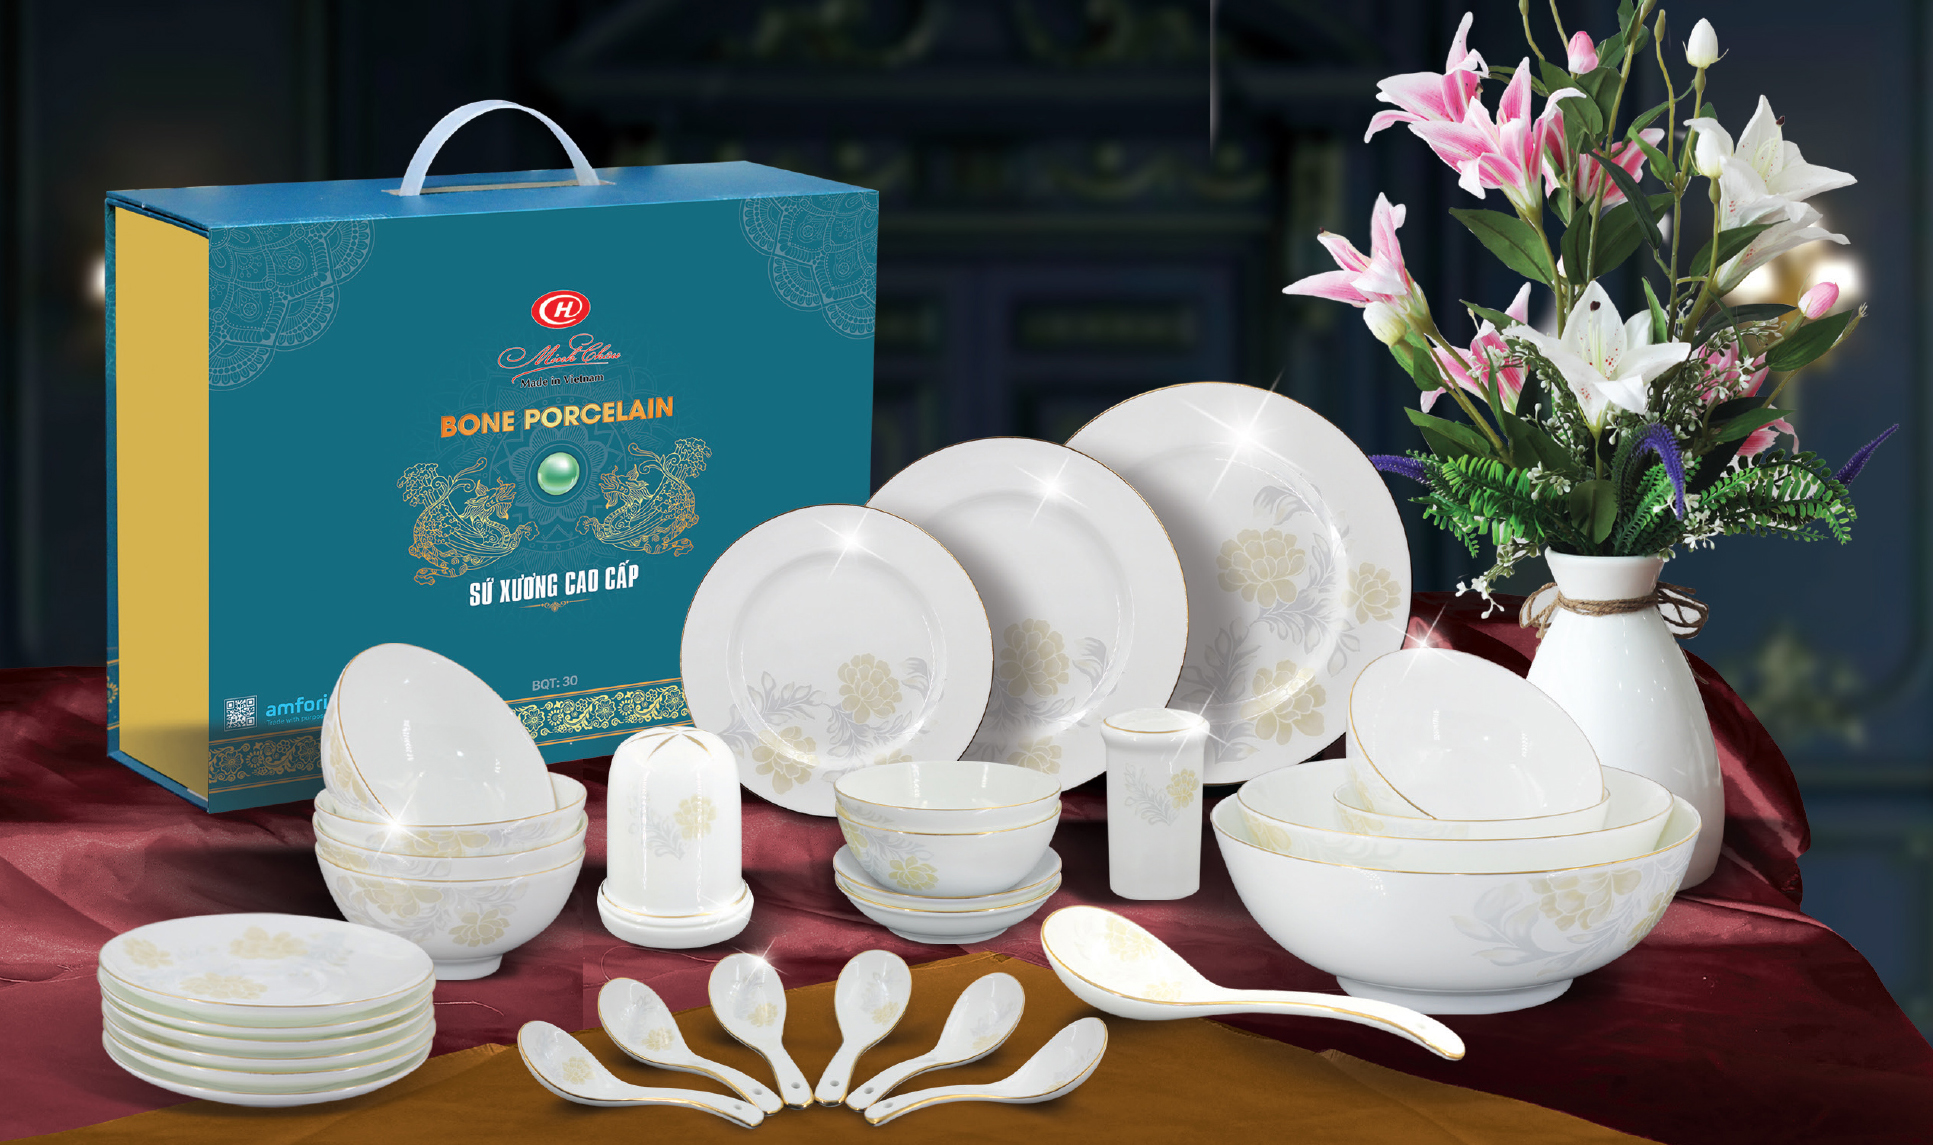 Porcelain table ware gift set by Minh Chau Vietnam